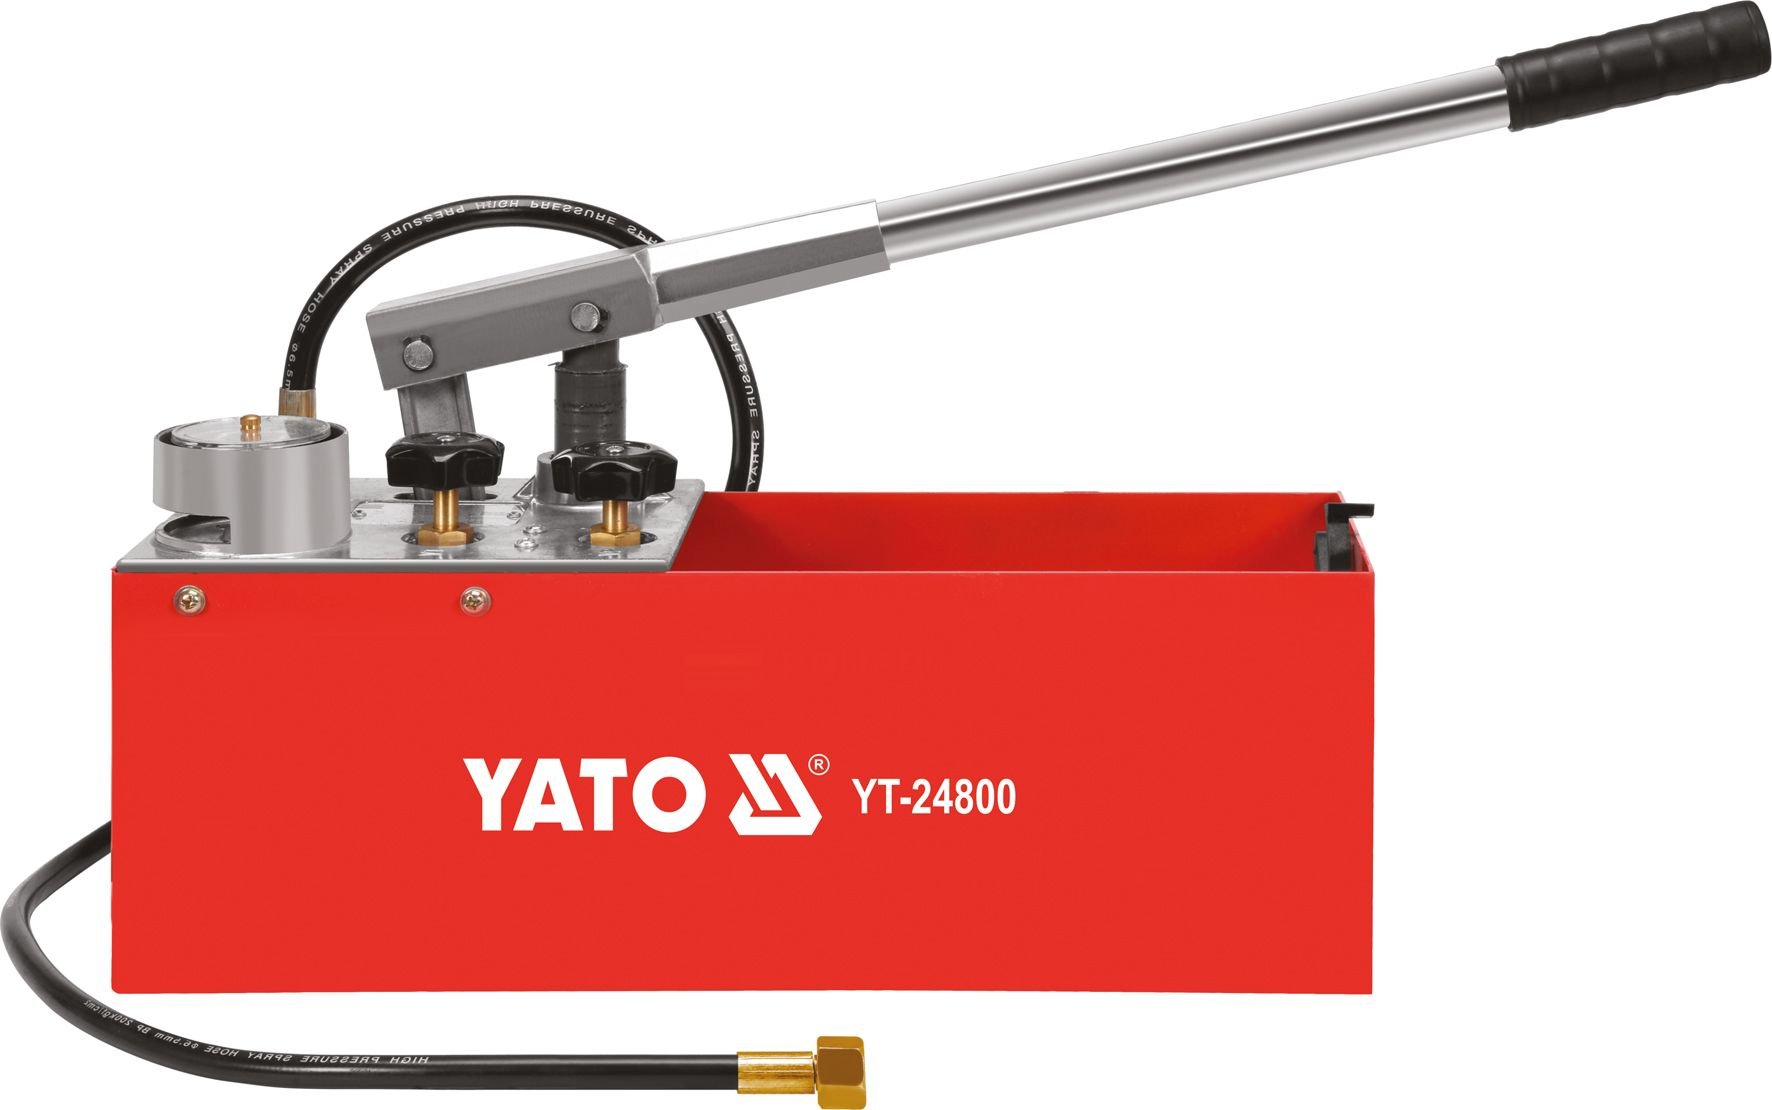 Yato Hand Pump For Pressure Testing (YT-24800)